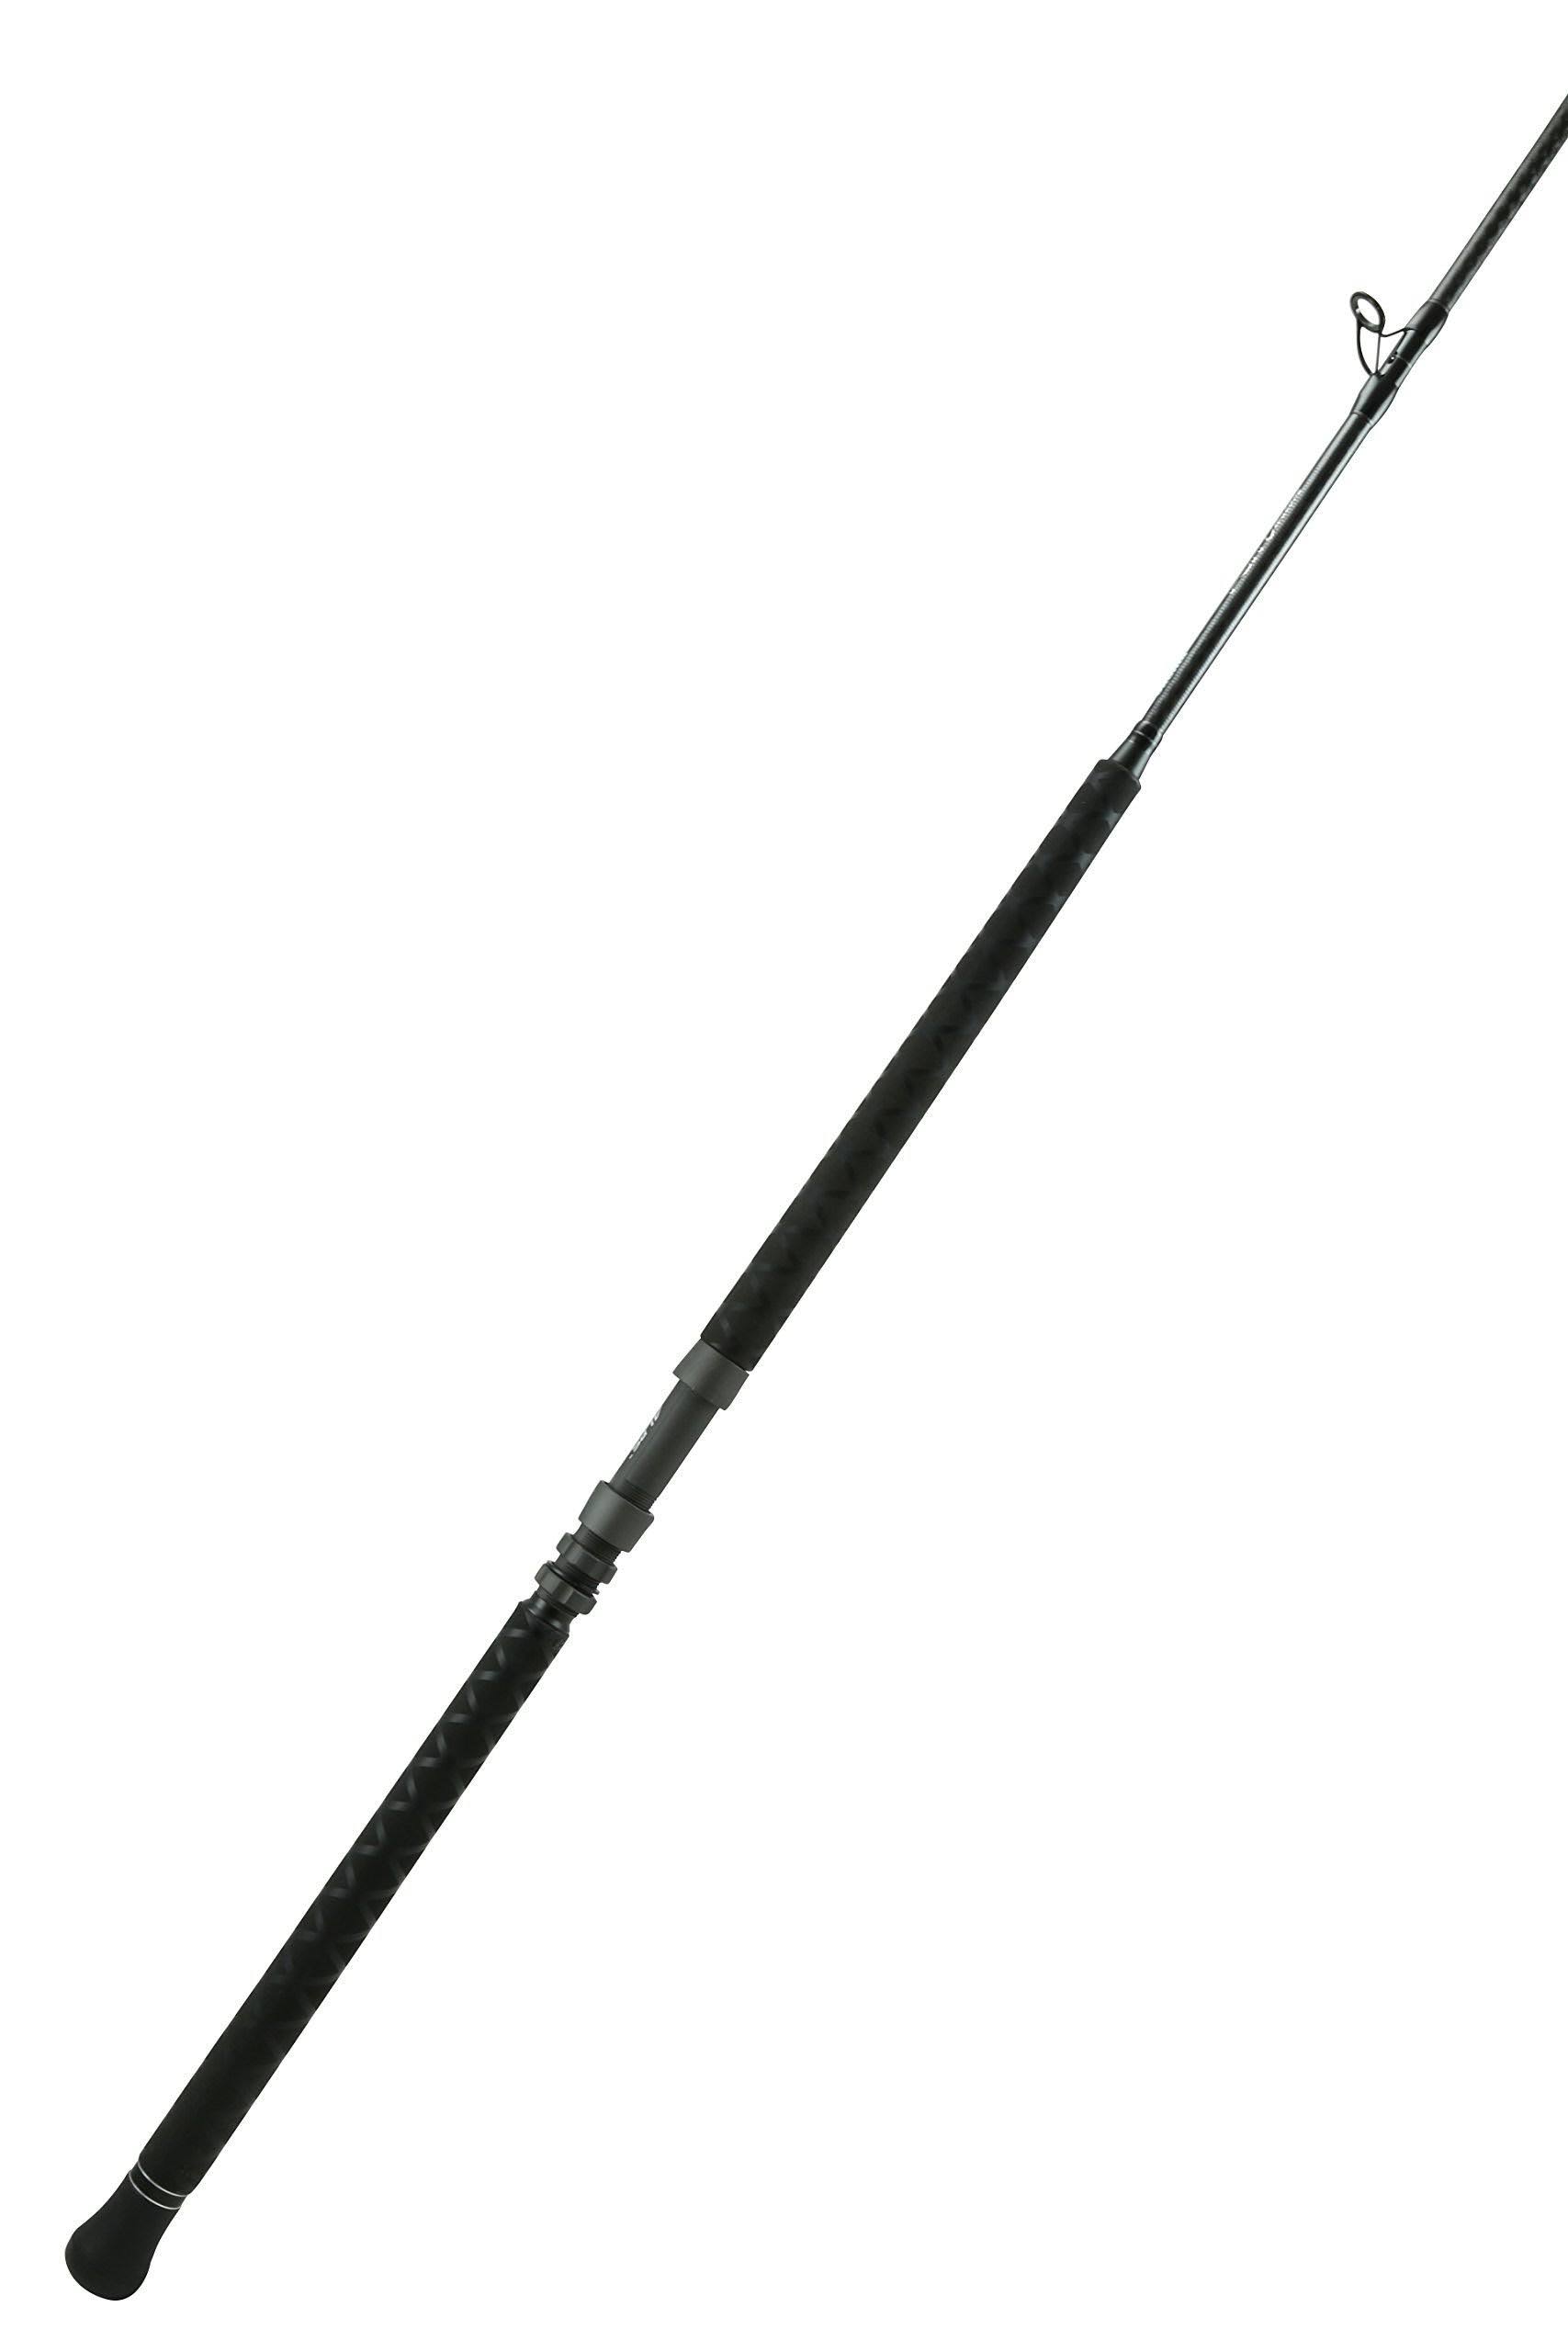 Okuma - PCH Custom Rod 8' 0" MH 1-pcs 15-40 lbs - PCH-C-801MH